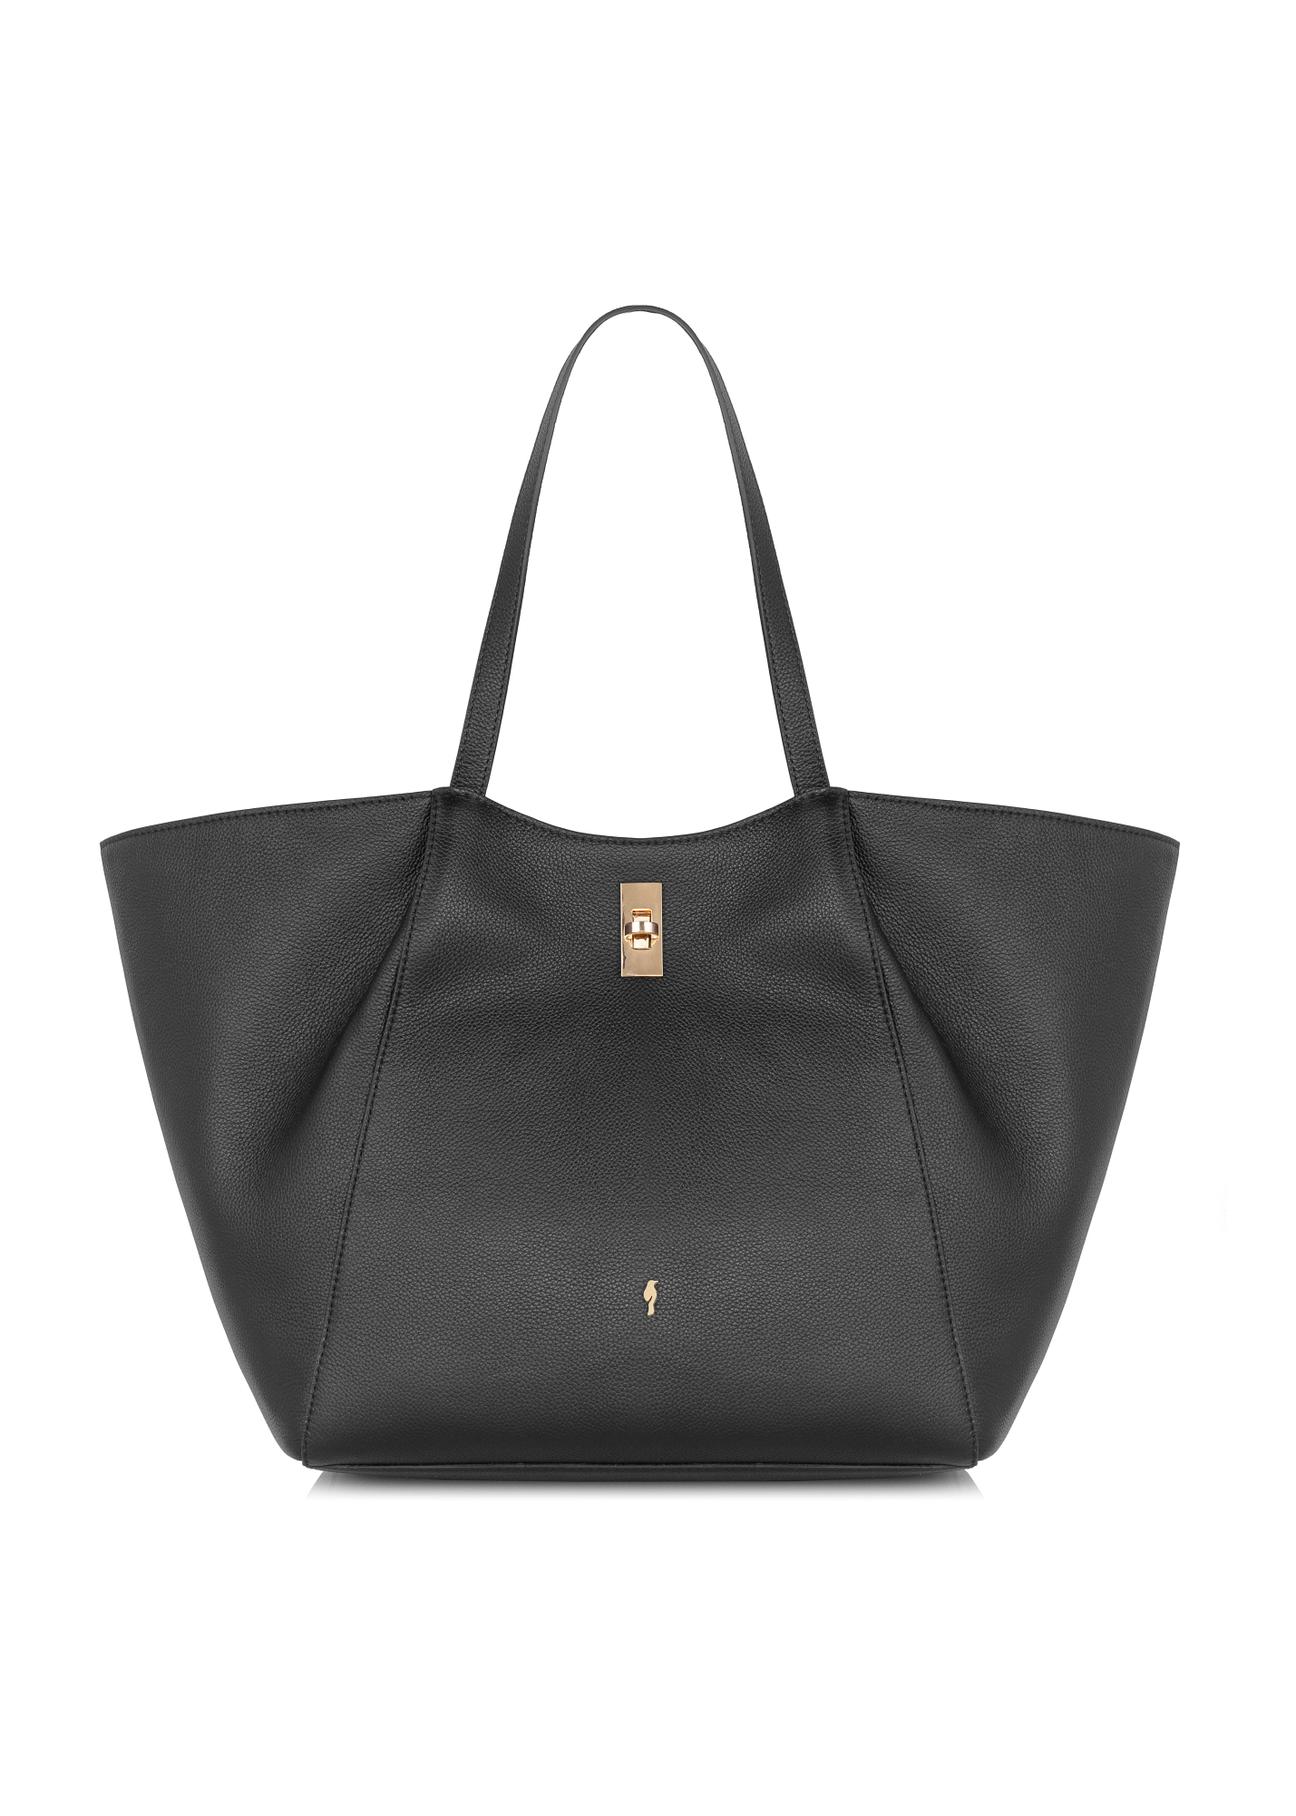 Skórzana czarna torebka shopper damska TORES-1000-99(W24)